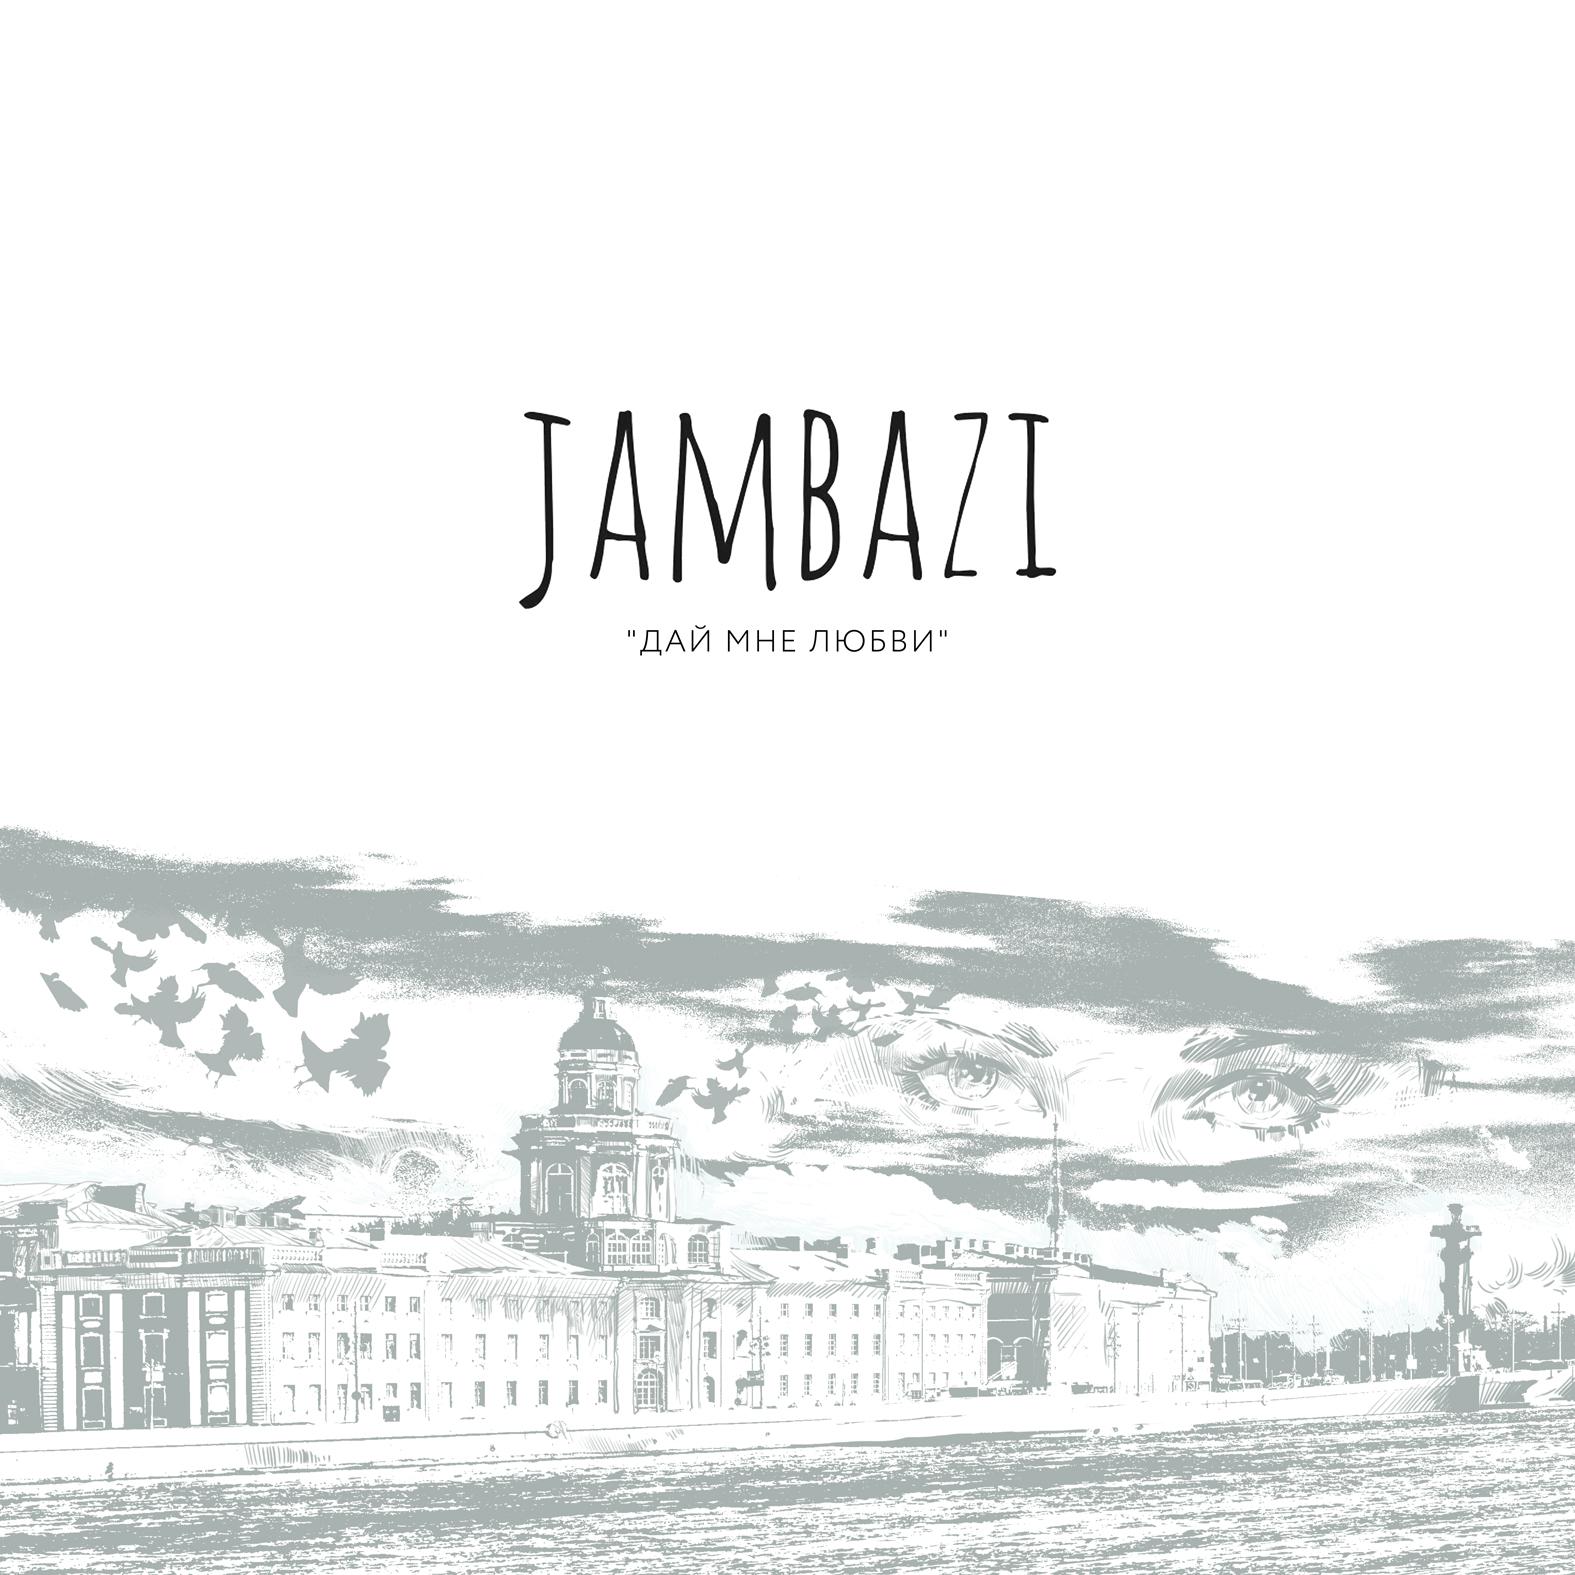 Jambazi - Всё будет хорошо